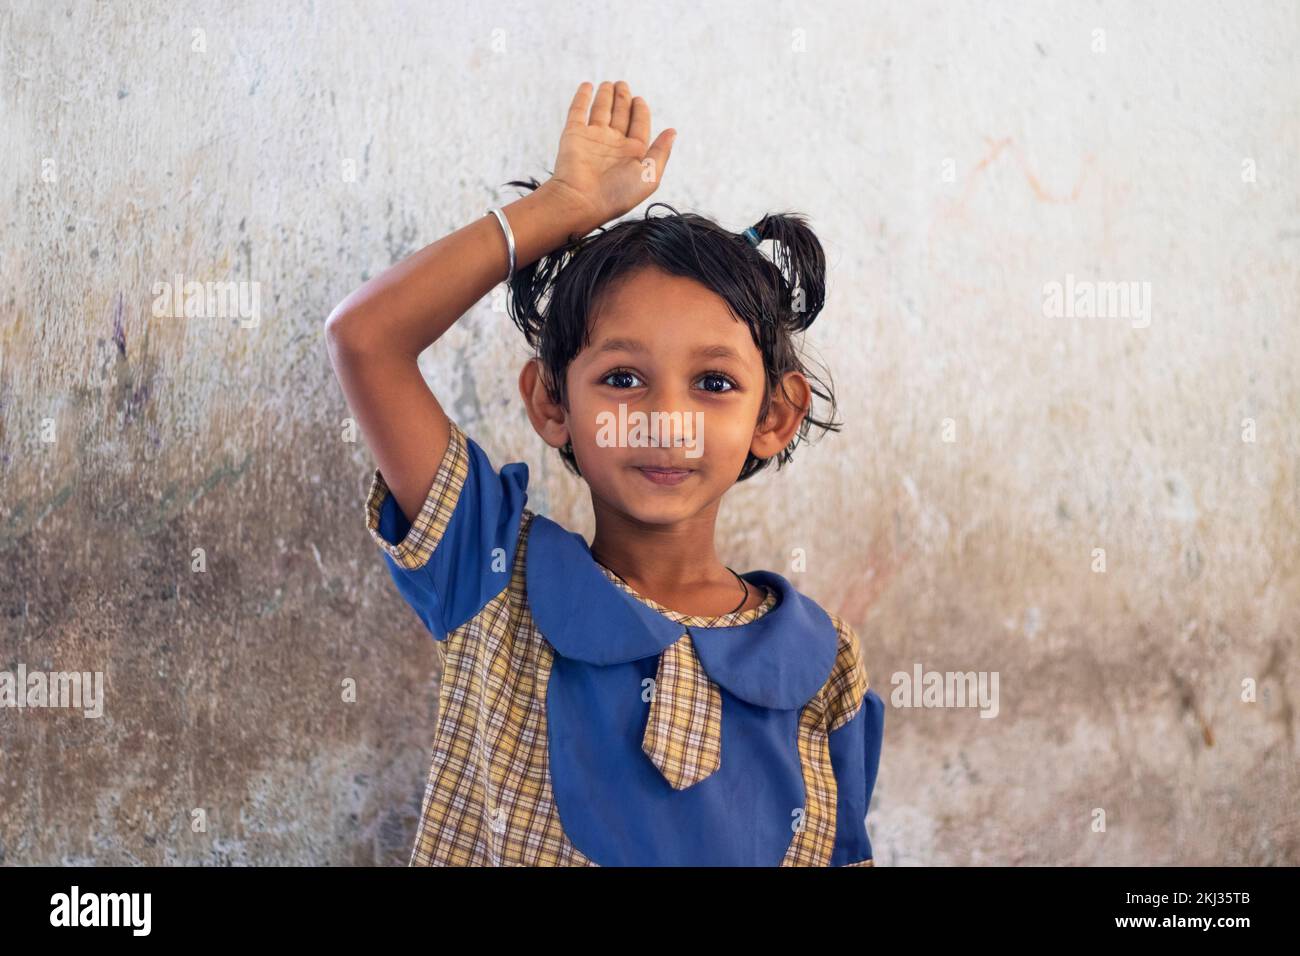 School girl Raising Hand in classroom Stock Photo